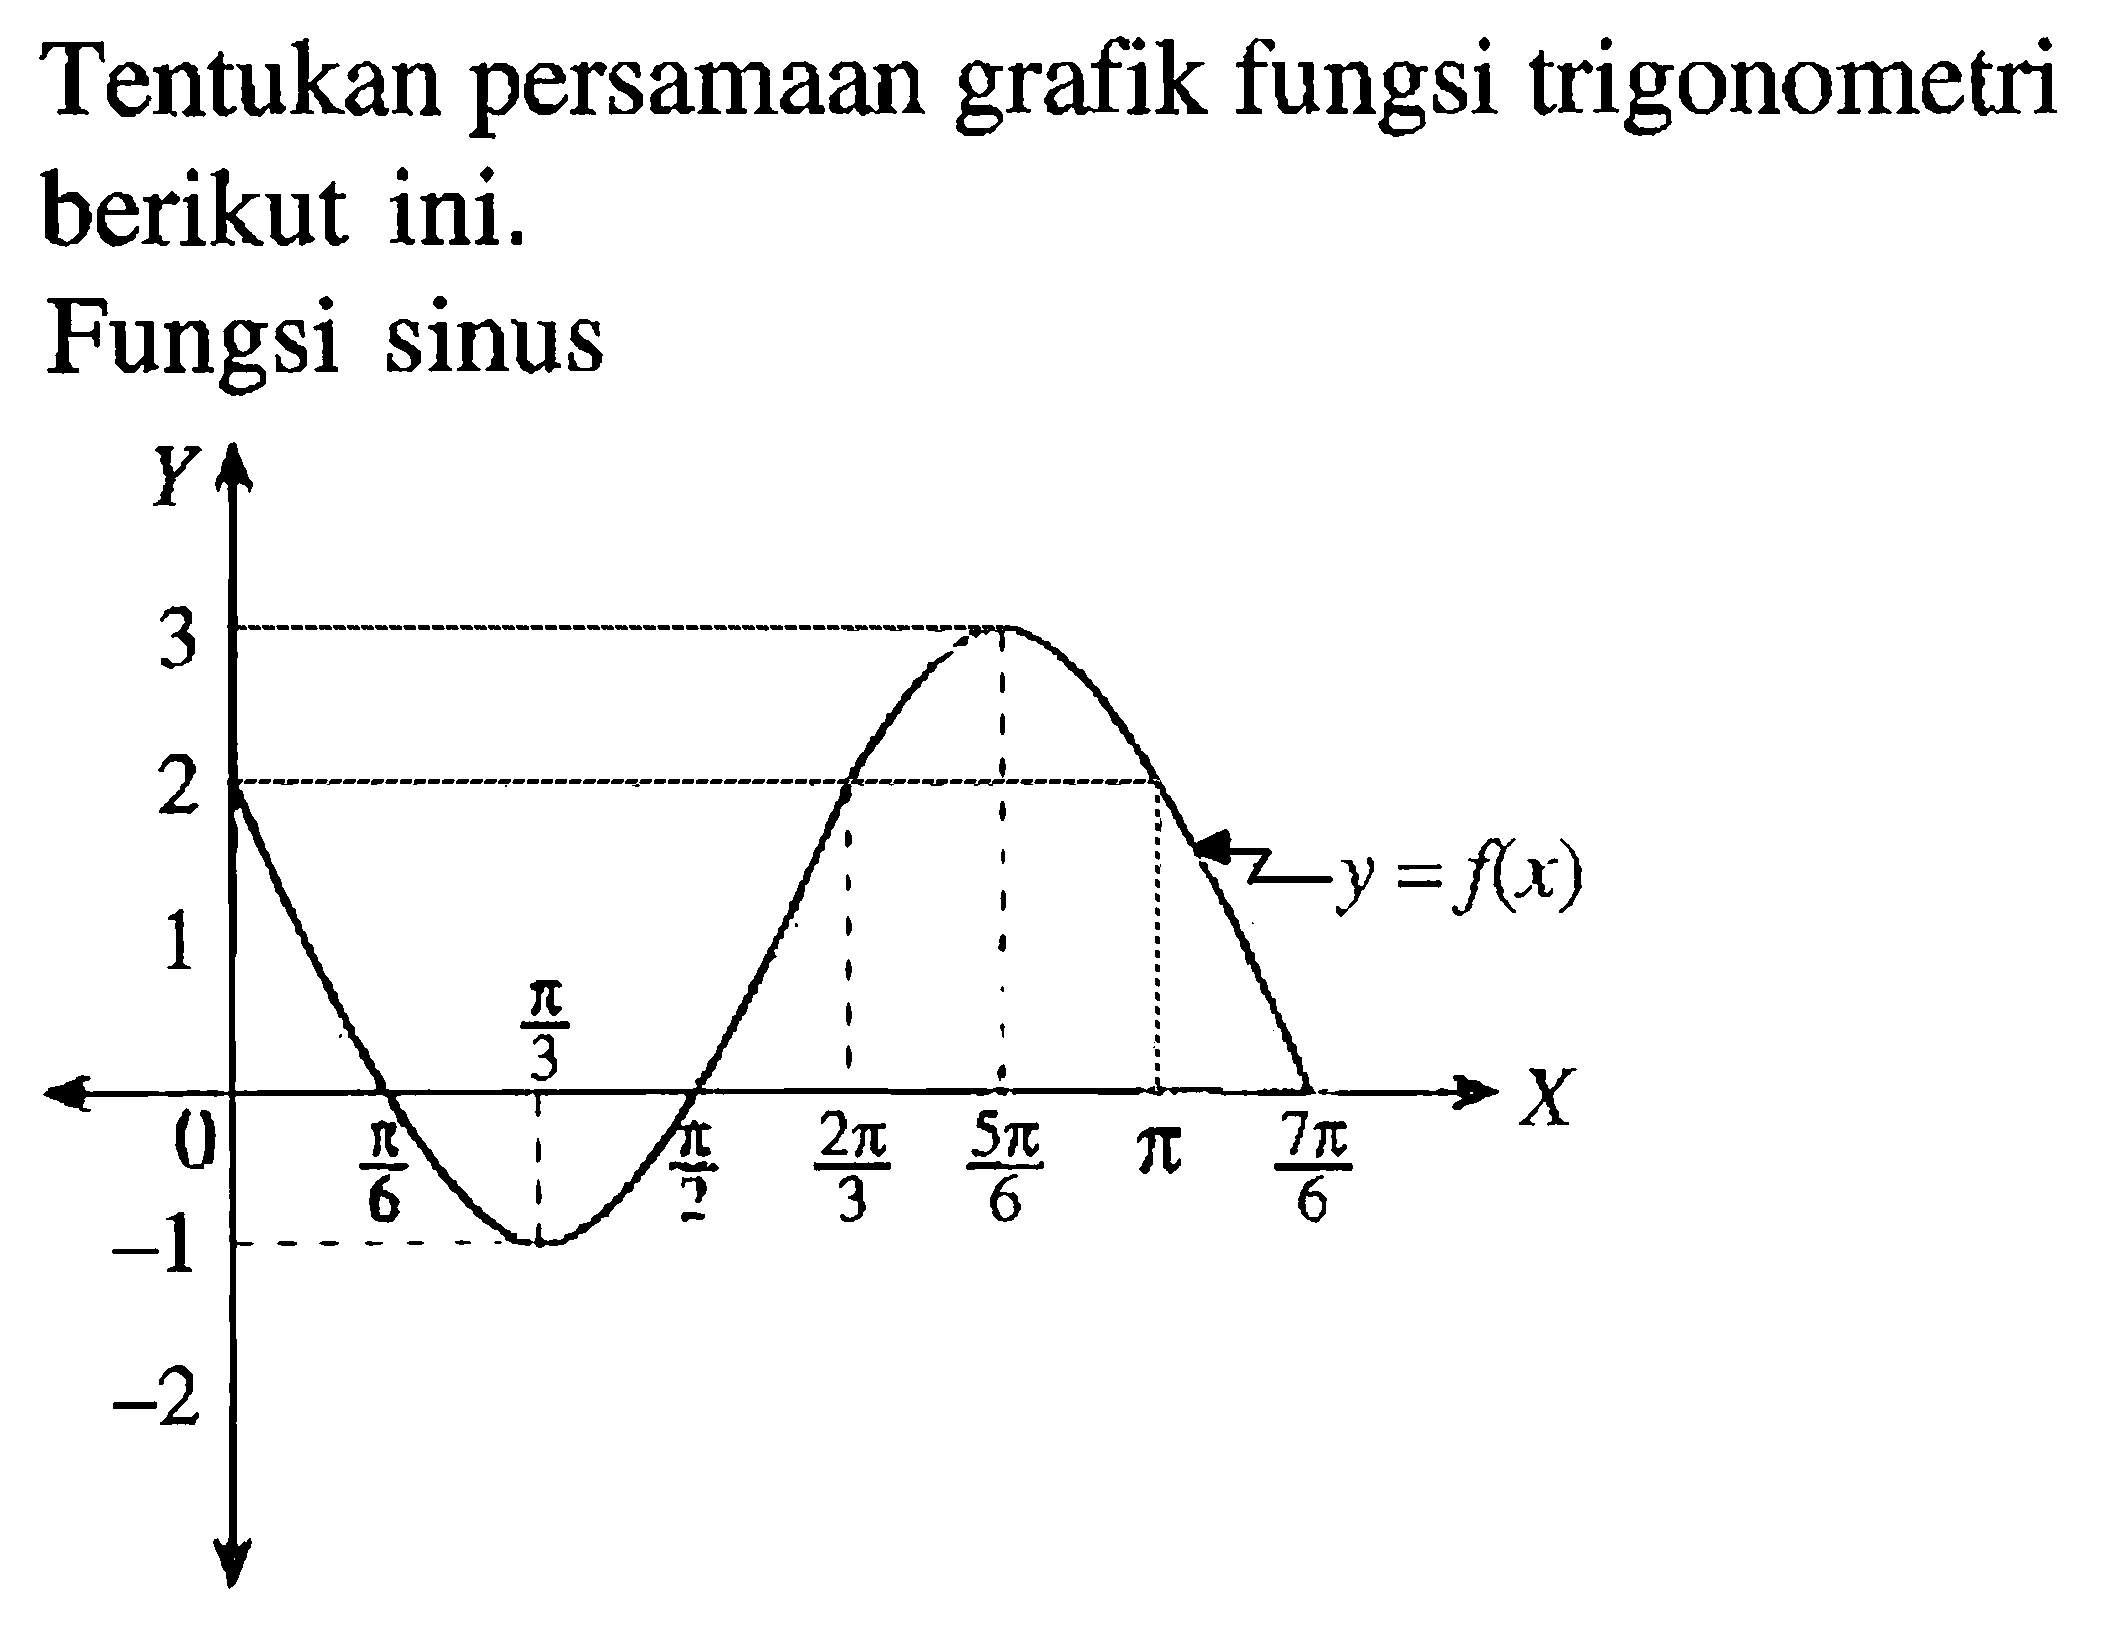 Tentukan persamaan grafik fungsi trigonometri berikut ini. Fungsi sinus Y 3 2 1 y=f(x) pi/3 0 pi/6 pi/2 2pi/3 5pi/6 pi 7pi/6 X -1 -2